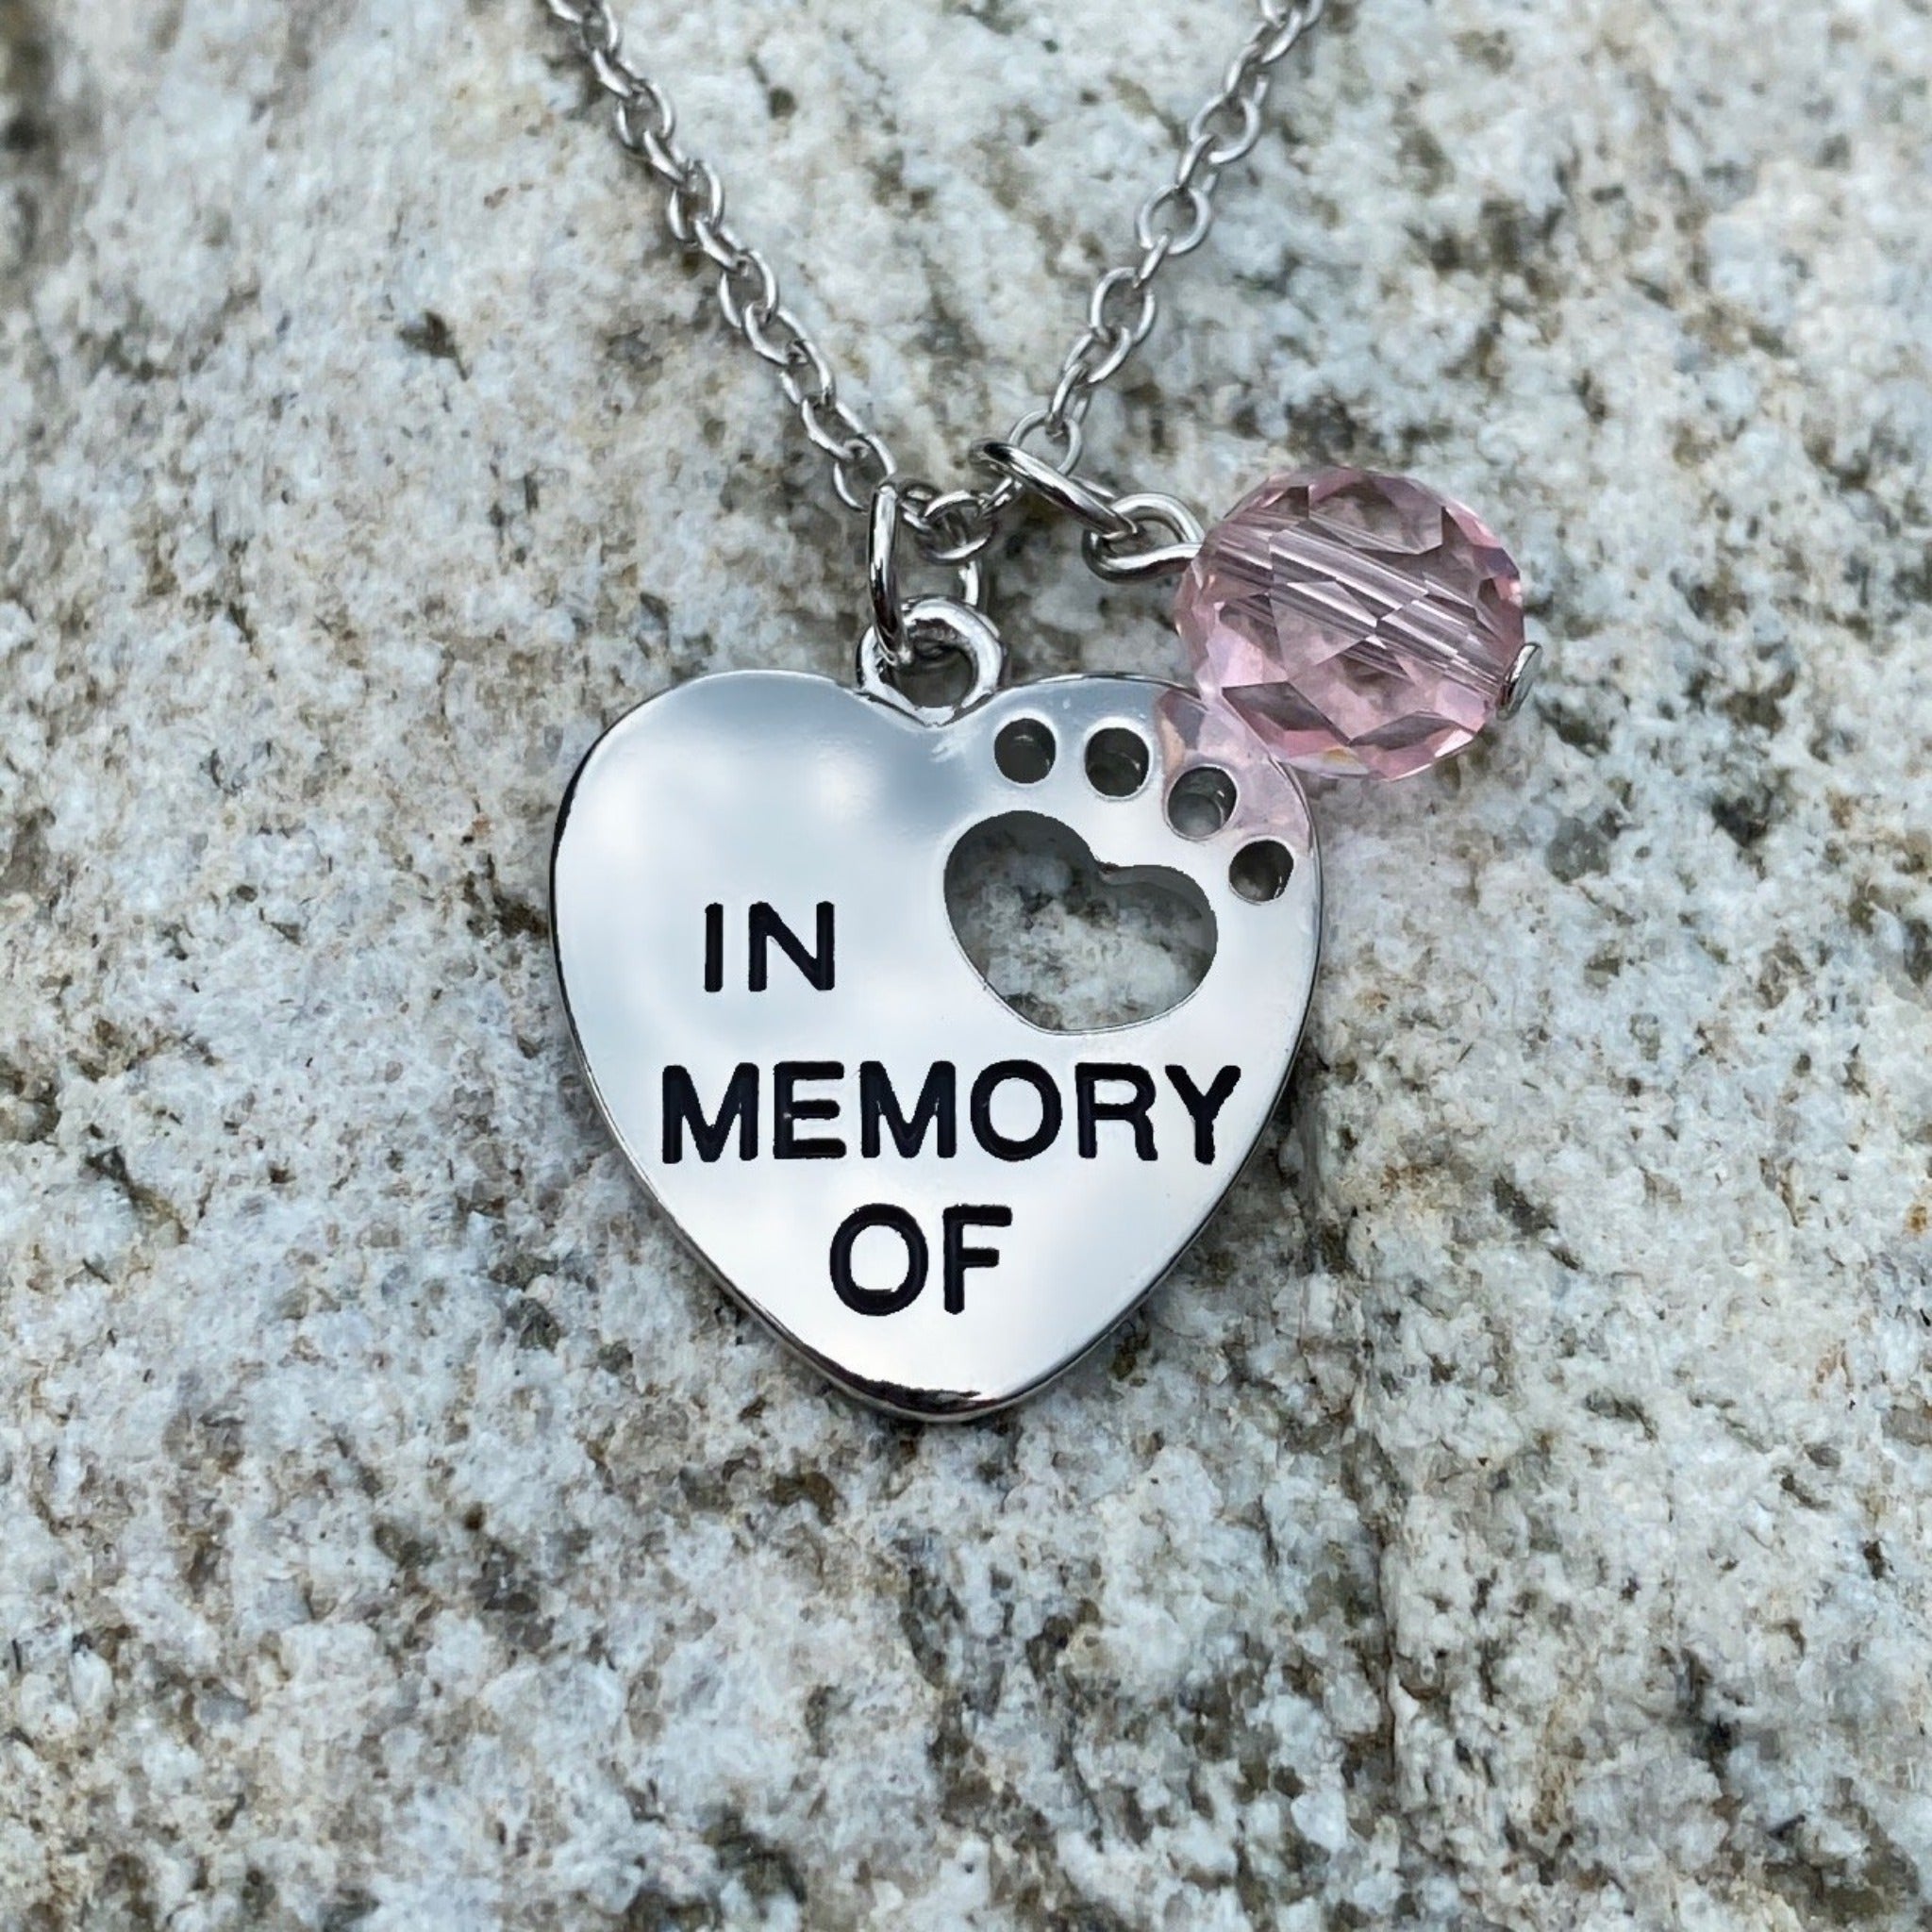 Dali - The Persistence of Memory - Necklace - Pivada.com